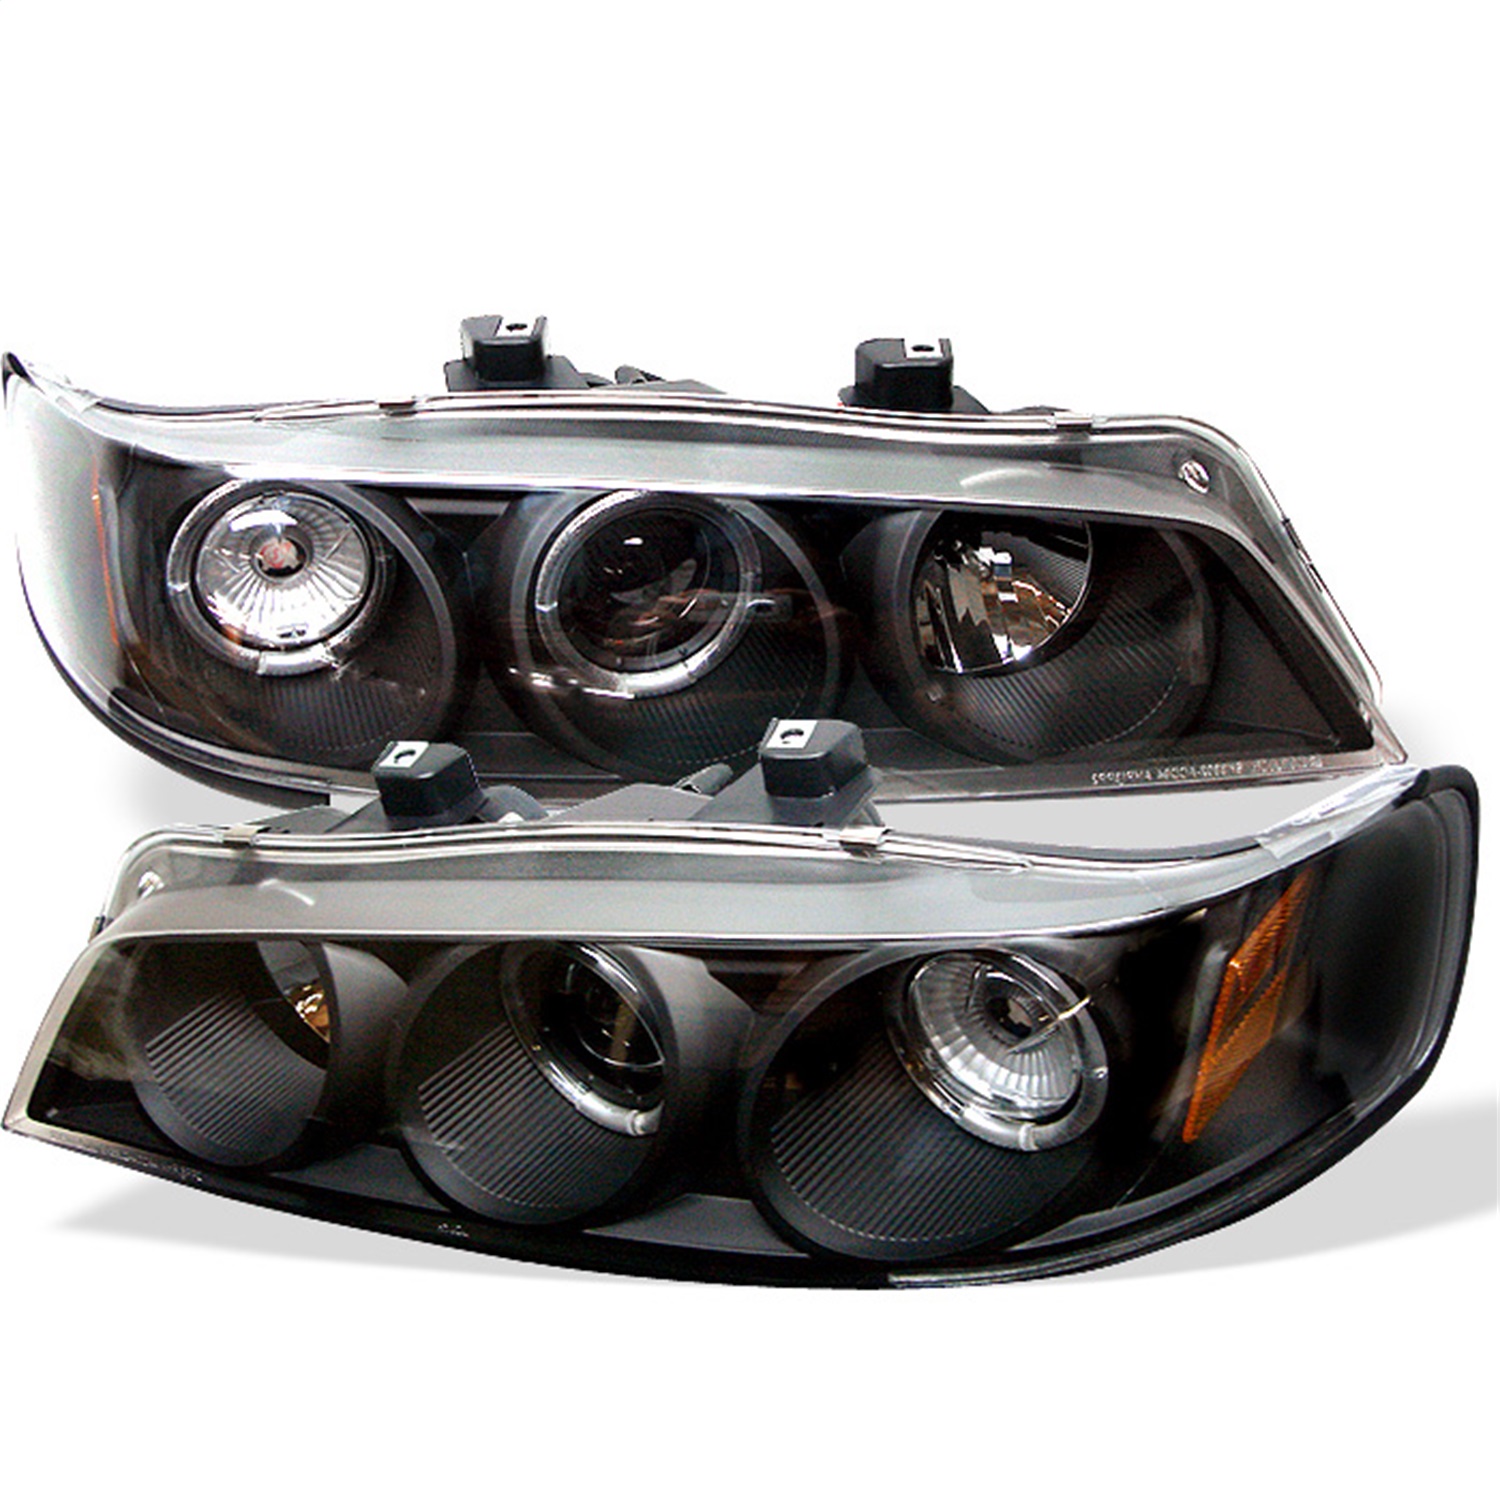 Spyder Auto 5010698 Halo Projector Headlights Fits 94-97 Accord